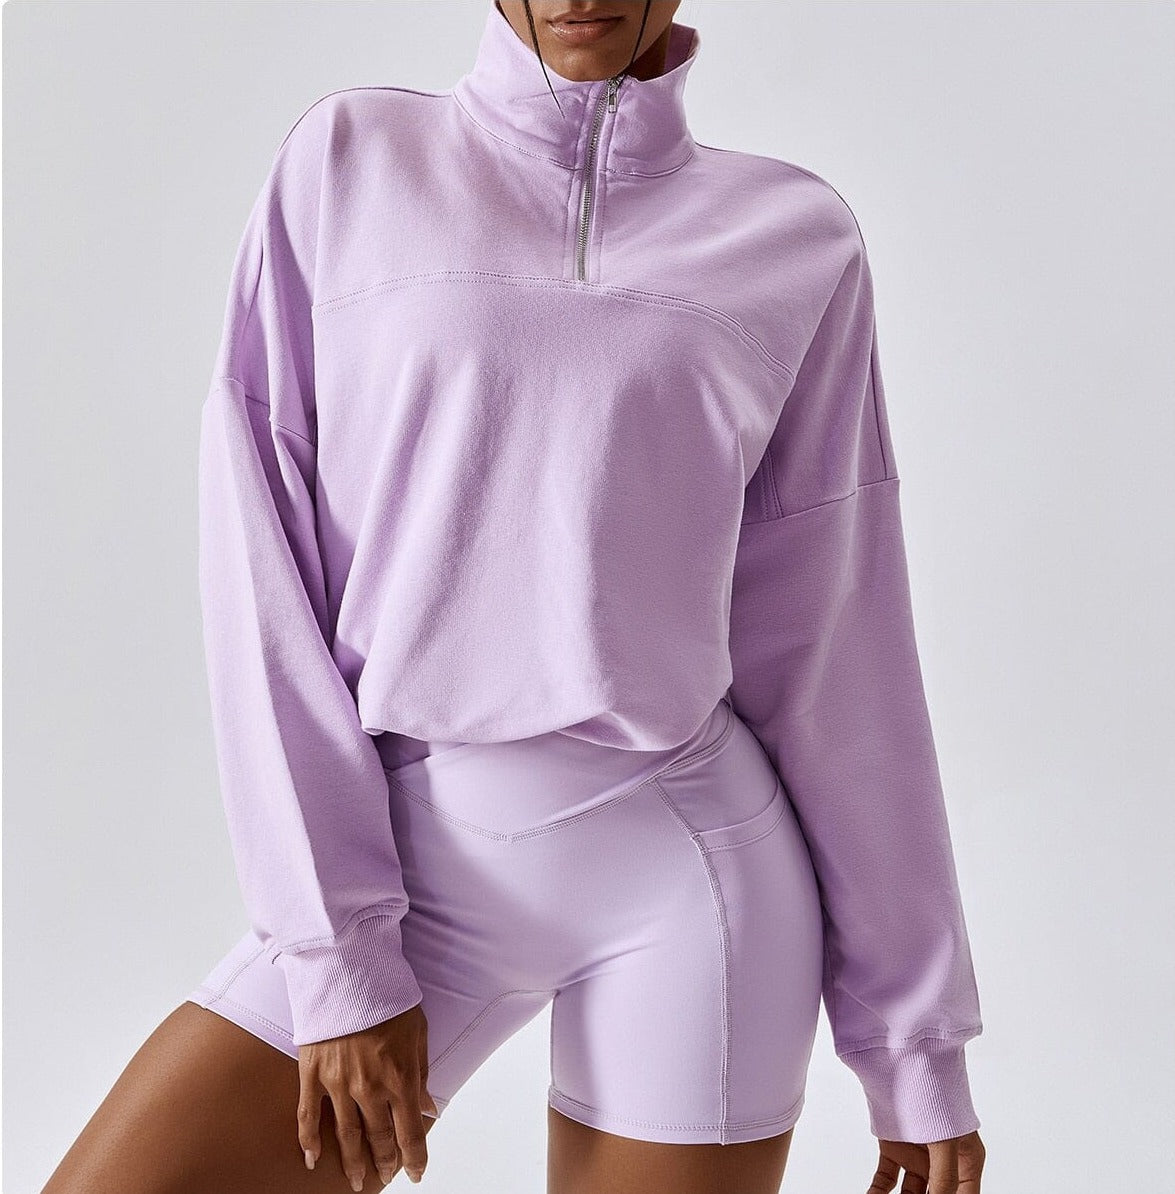 Zipper Loose Long Sleeve Sweater Home Truetights Romantic Purple S 